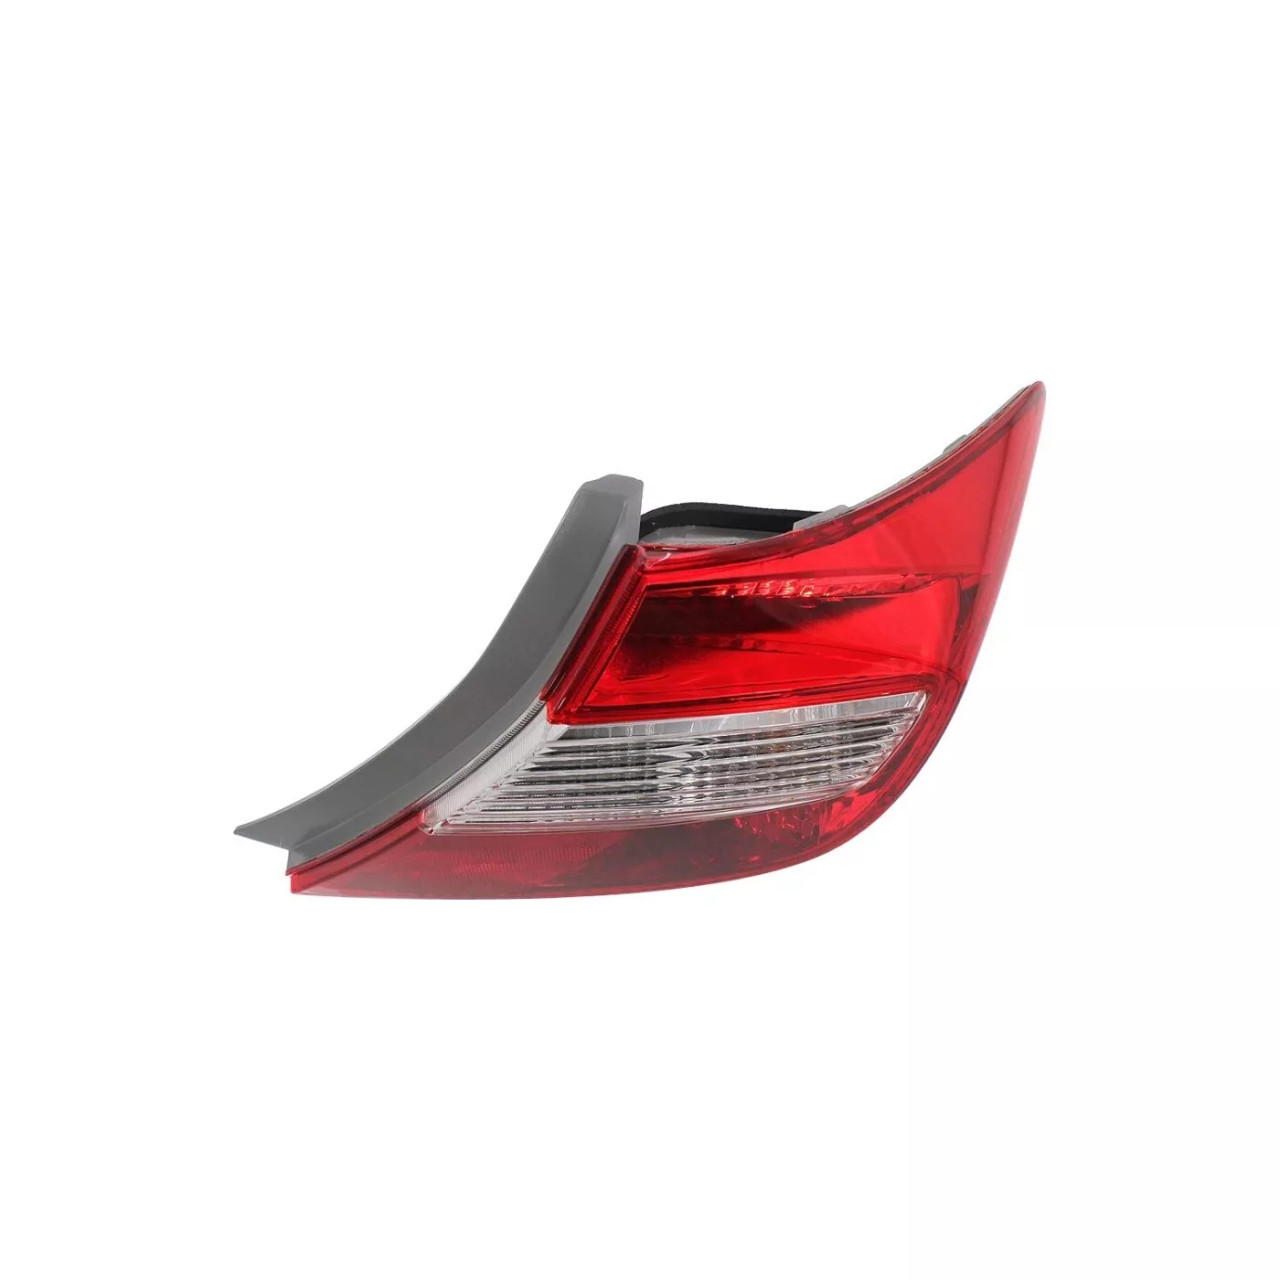 Halogen Tail Light Set For 2012 Honda Civic Sedan Clear/Red w/ Bulbs 2Pcs